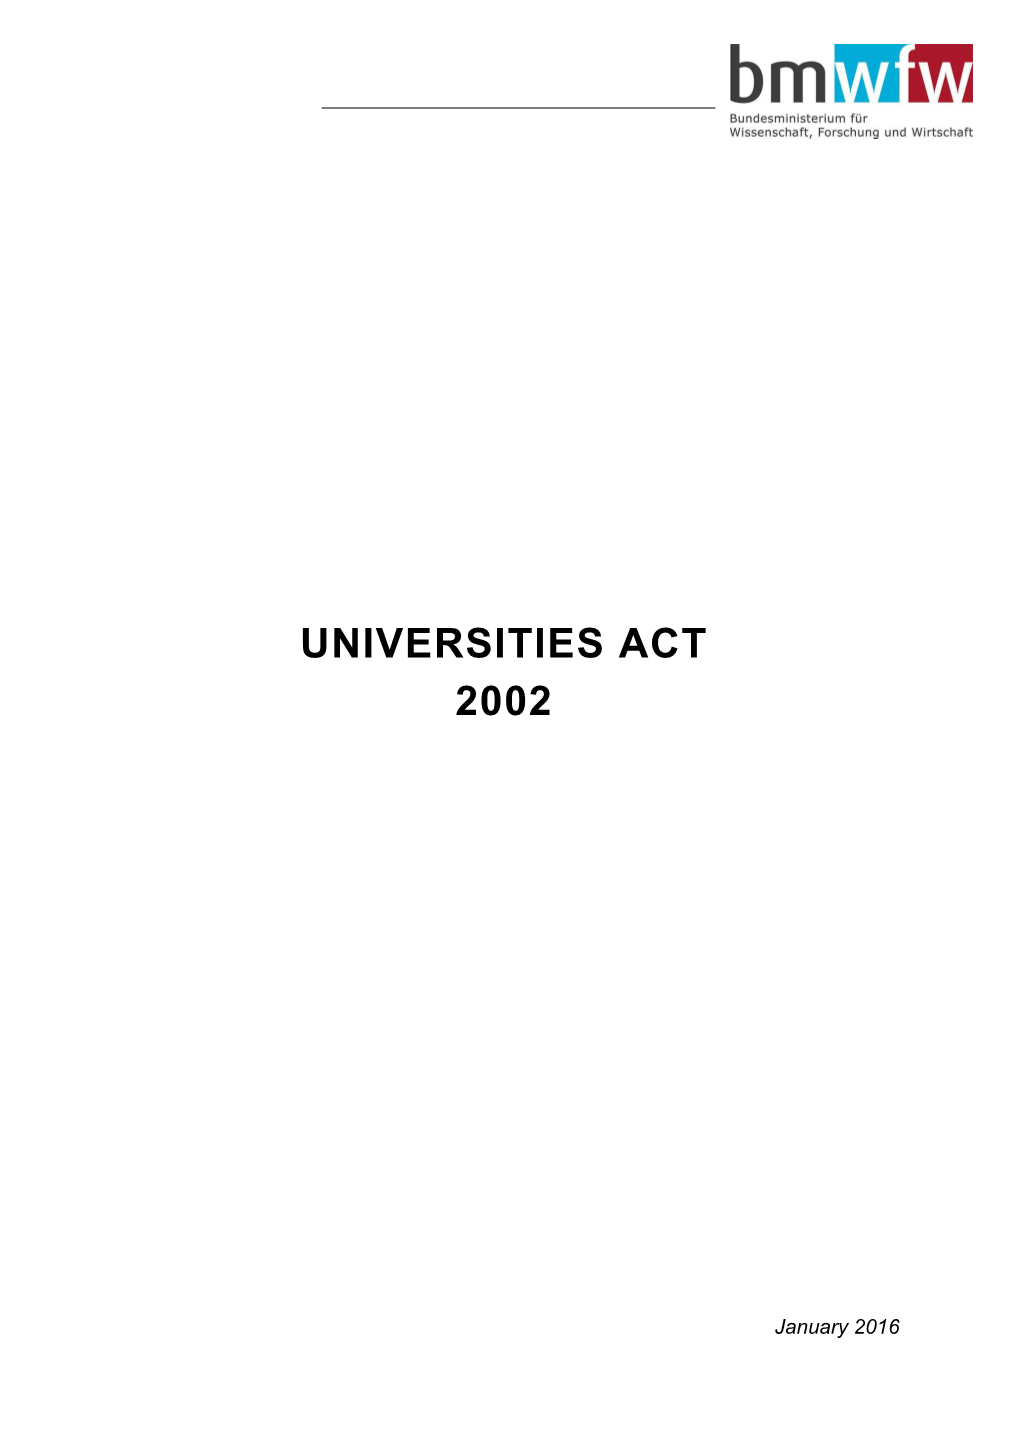 Universities Act 2002